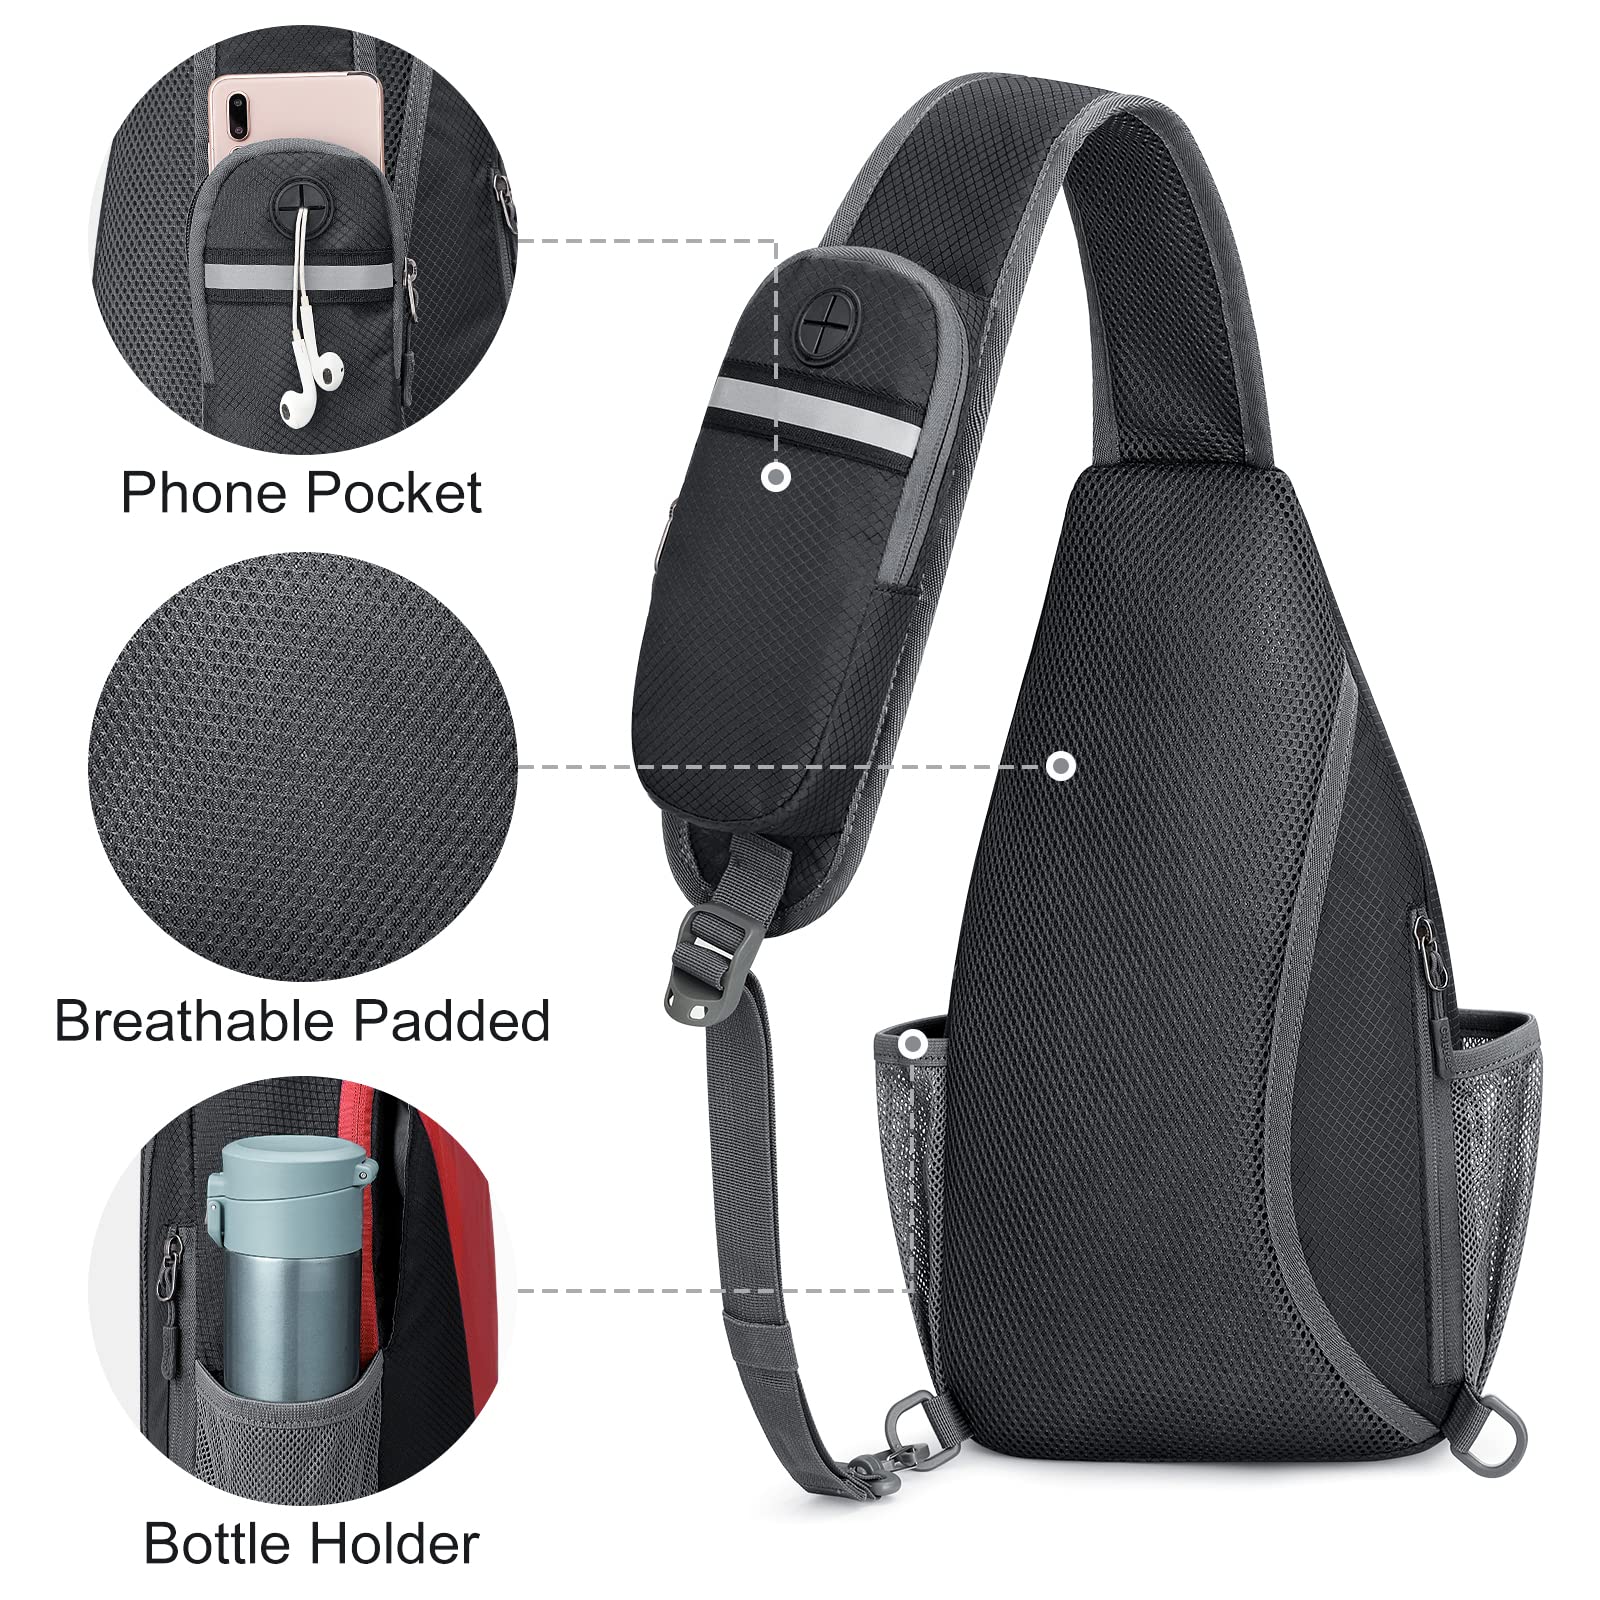 G4Free Sling Bag RFID Blocking Sling Backpack Crossbody Chest Bag Daypack  for Hiking Travel(Black)